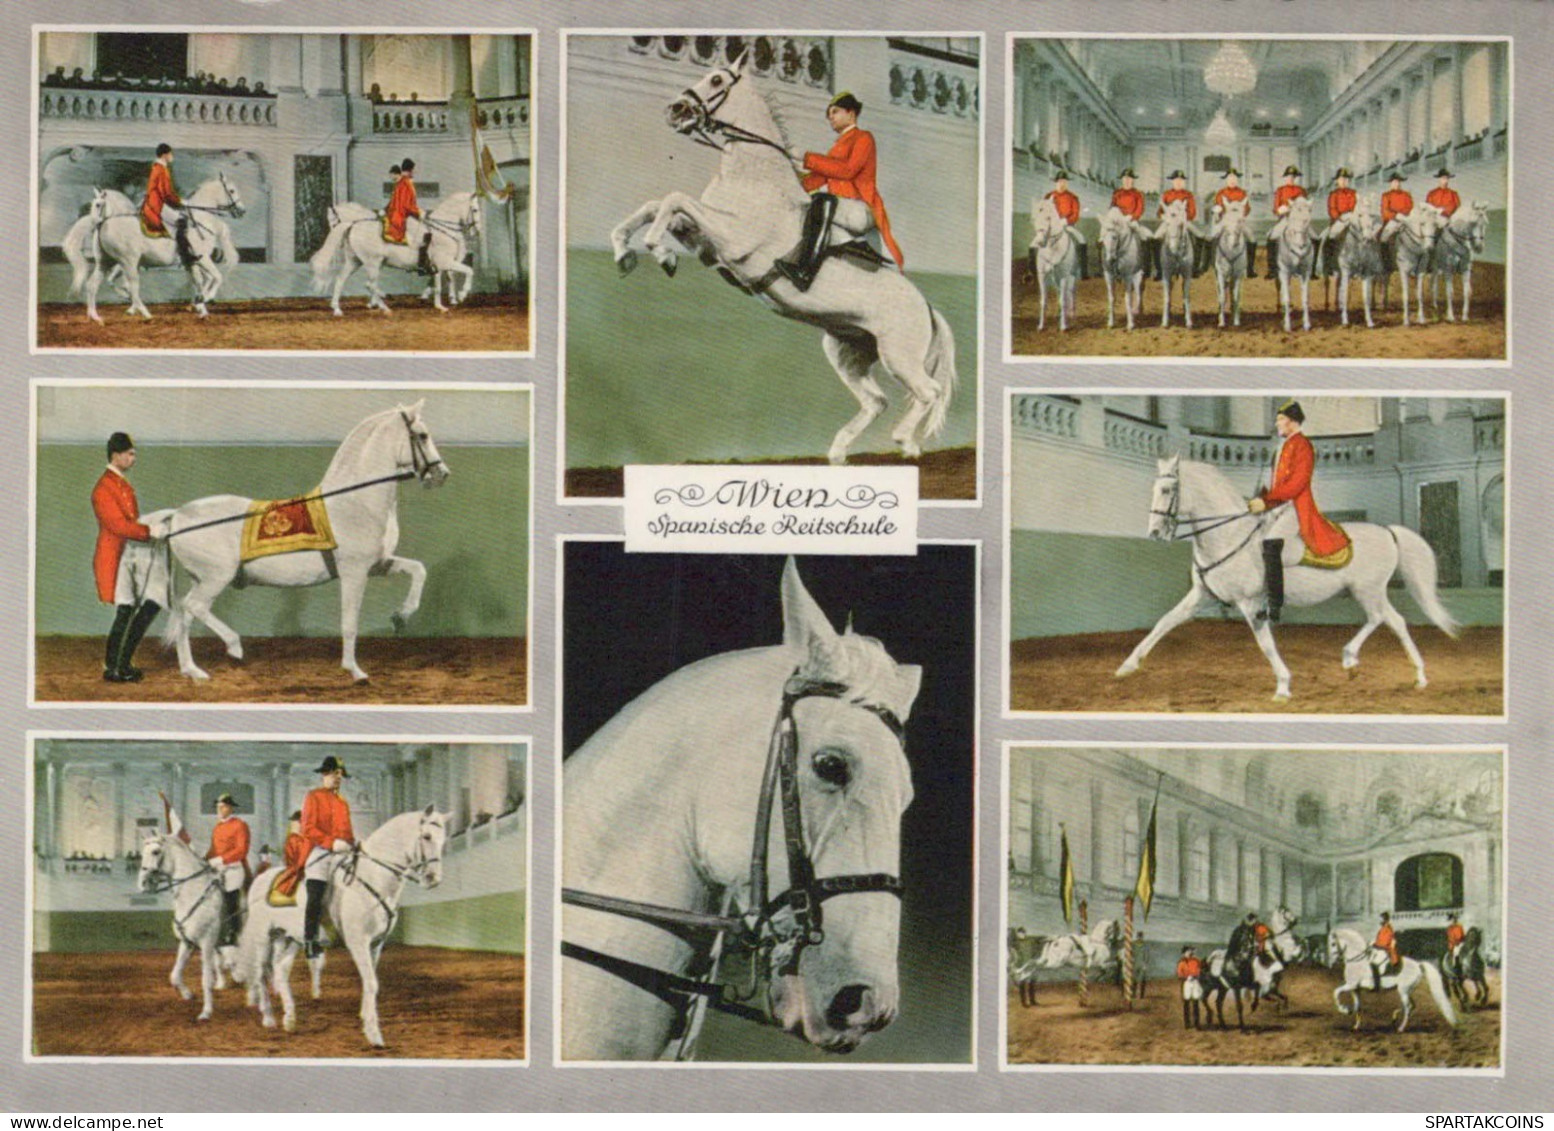 CABALLO Animales Vintage Tarjeta Postal CPSM #PBR950.ES - Pferde